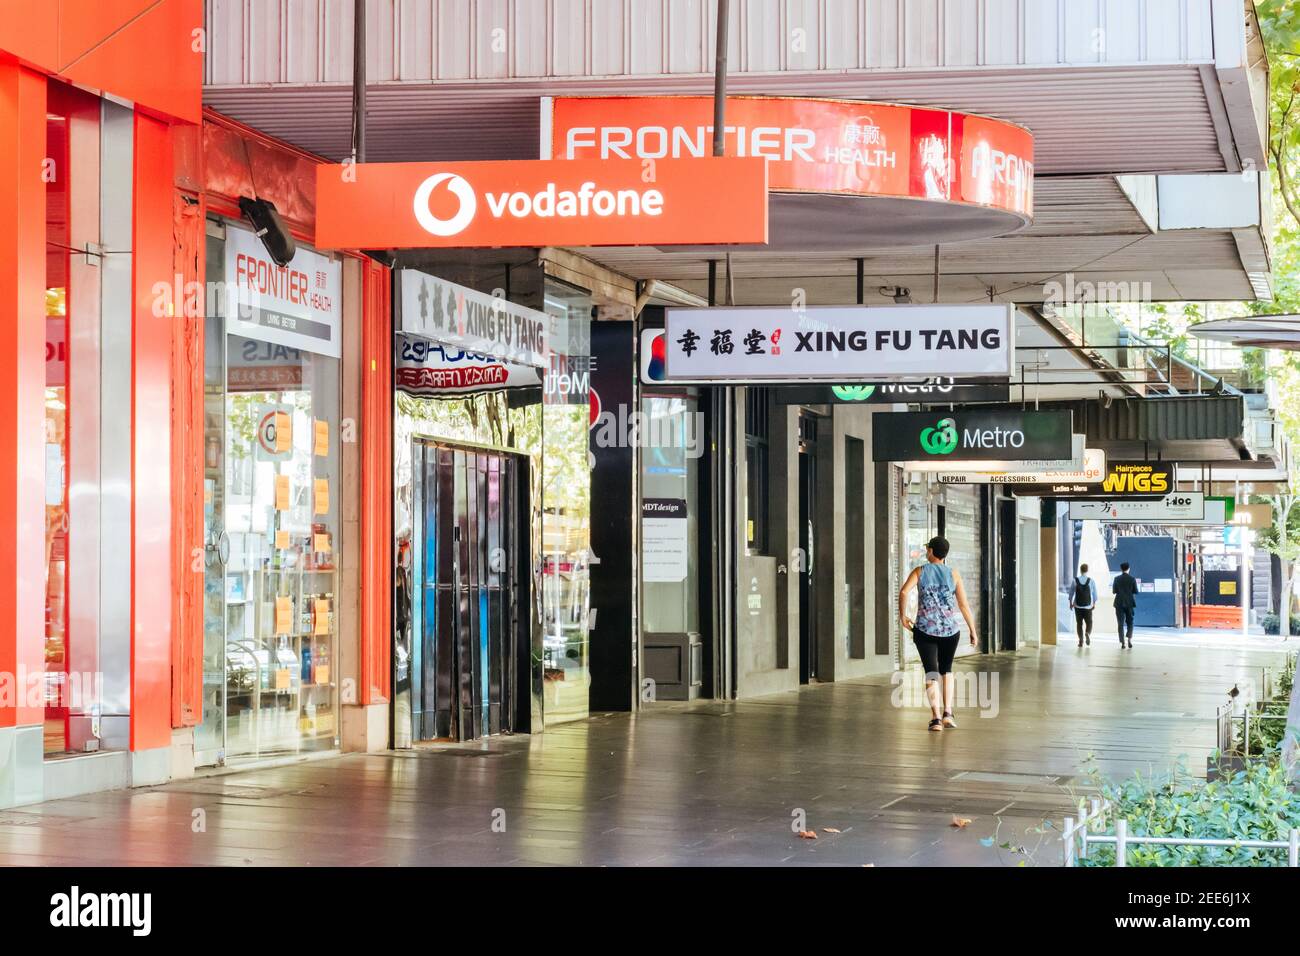 Melbourne in Lockdown During Coronavirus Pandemic Stock Photo